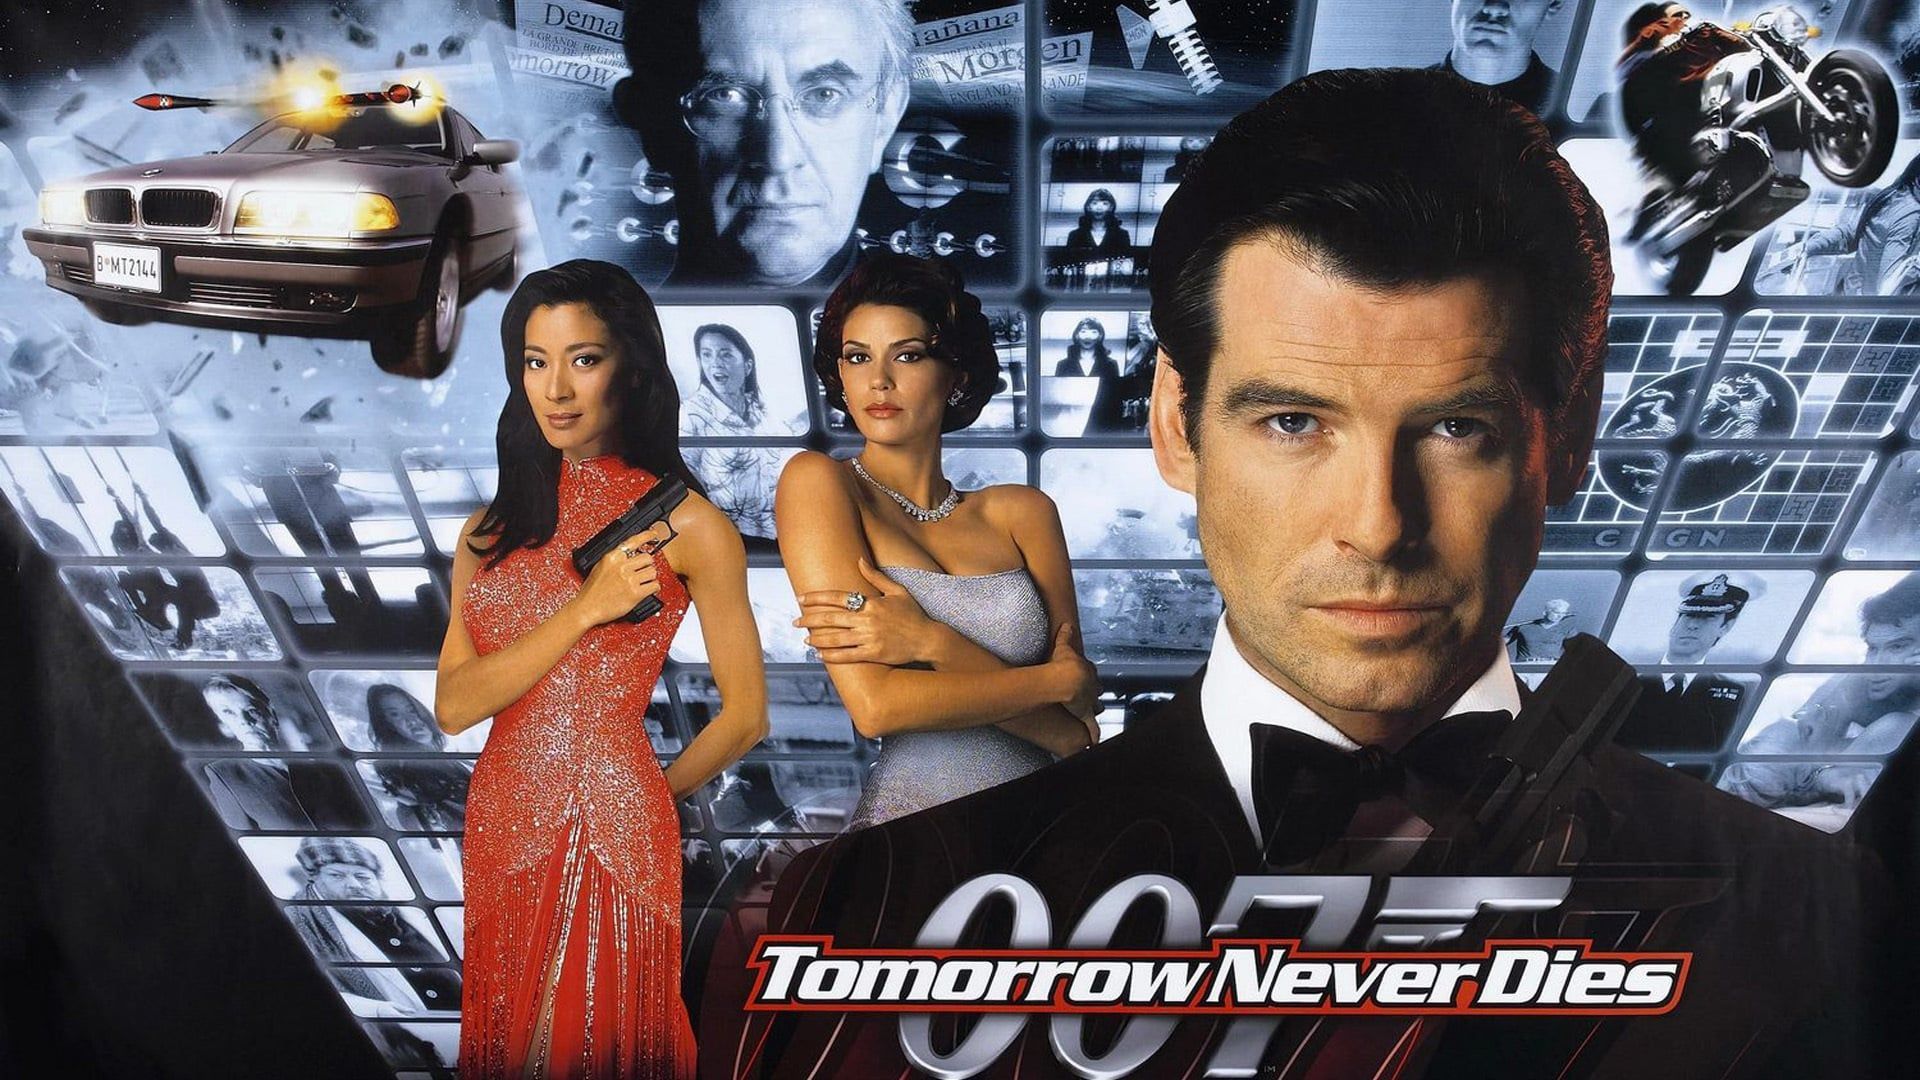 holde øje James Bond: Tomorrow Never Dies 1997 online gratis fuld film onlineJames Bond: Tomorrow Never Dies. Movies online, Full movies, Full movies online free